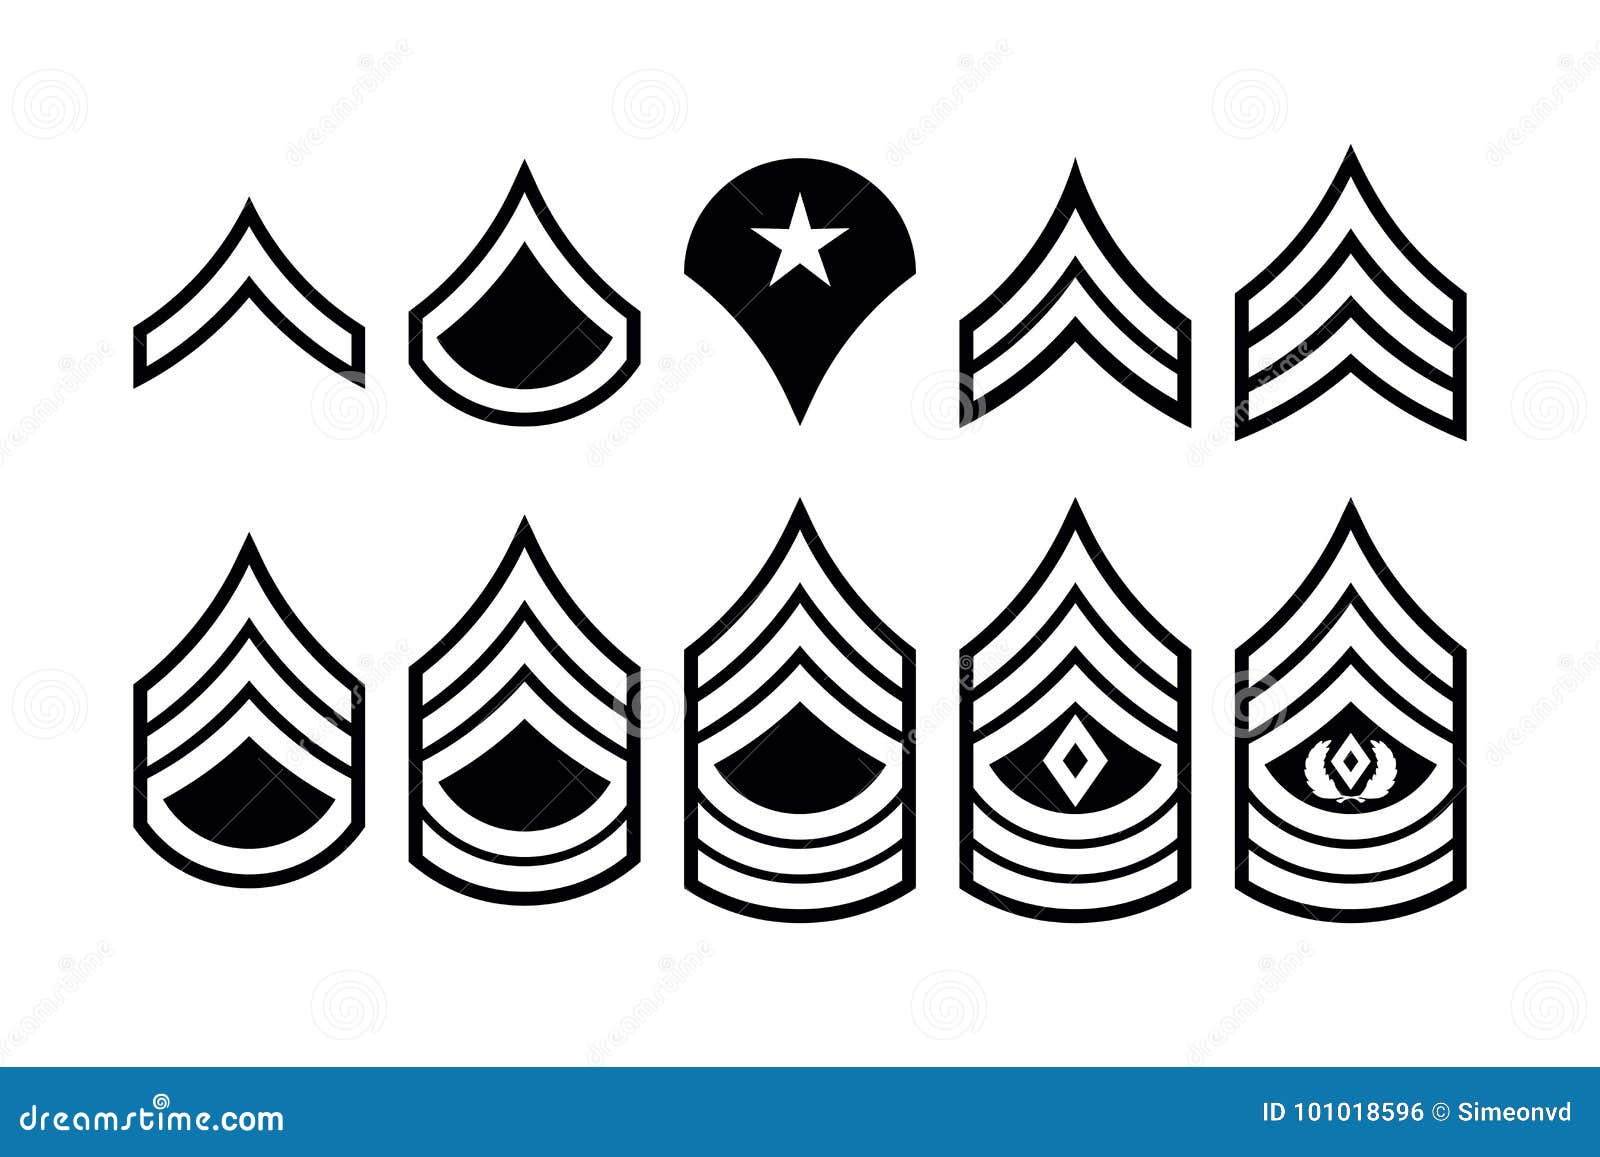 military ranks stripes and chevrons.  set army insignia